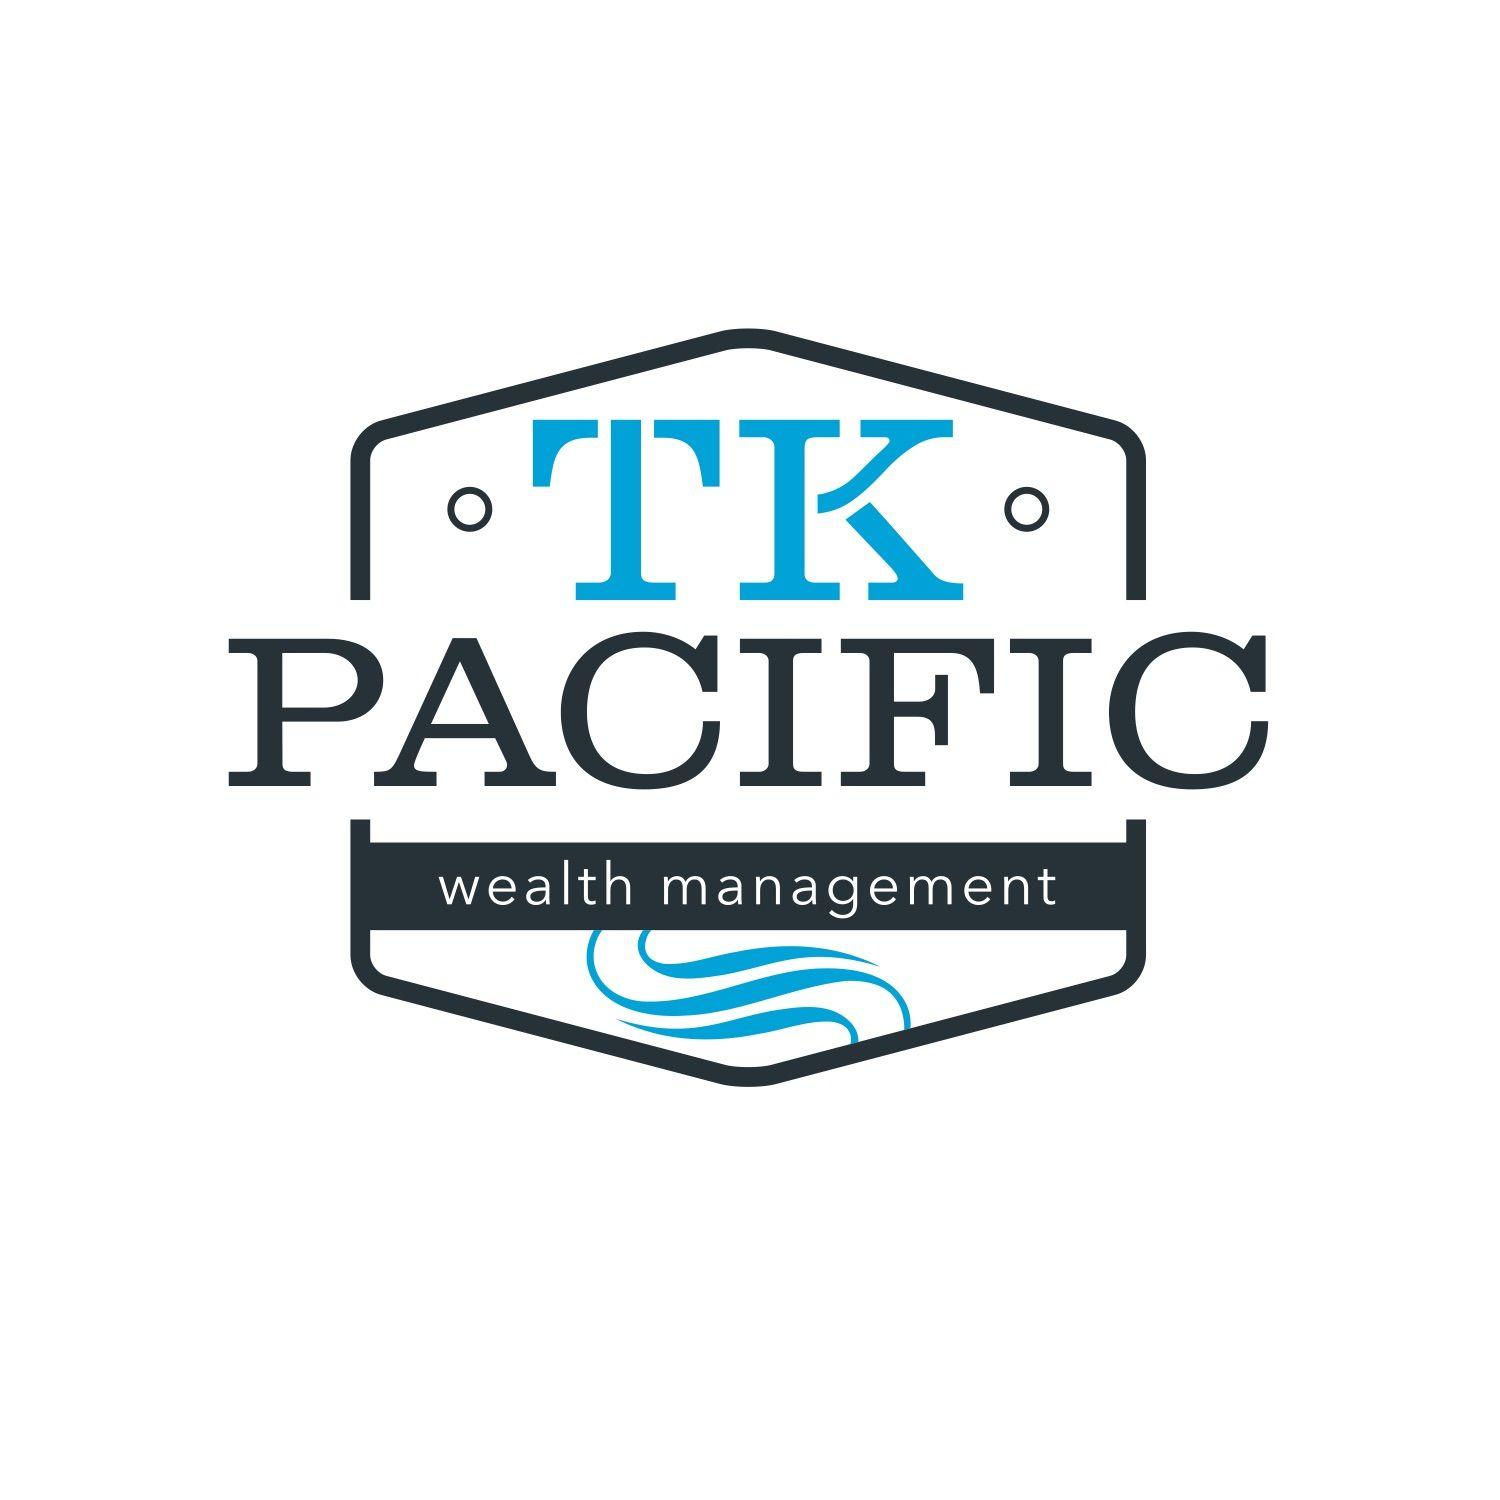 CFP Logo - Timothy Kenney CFP® - TK Pacific Wealth, Inc.